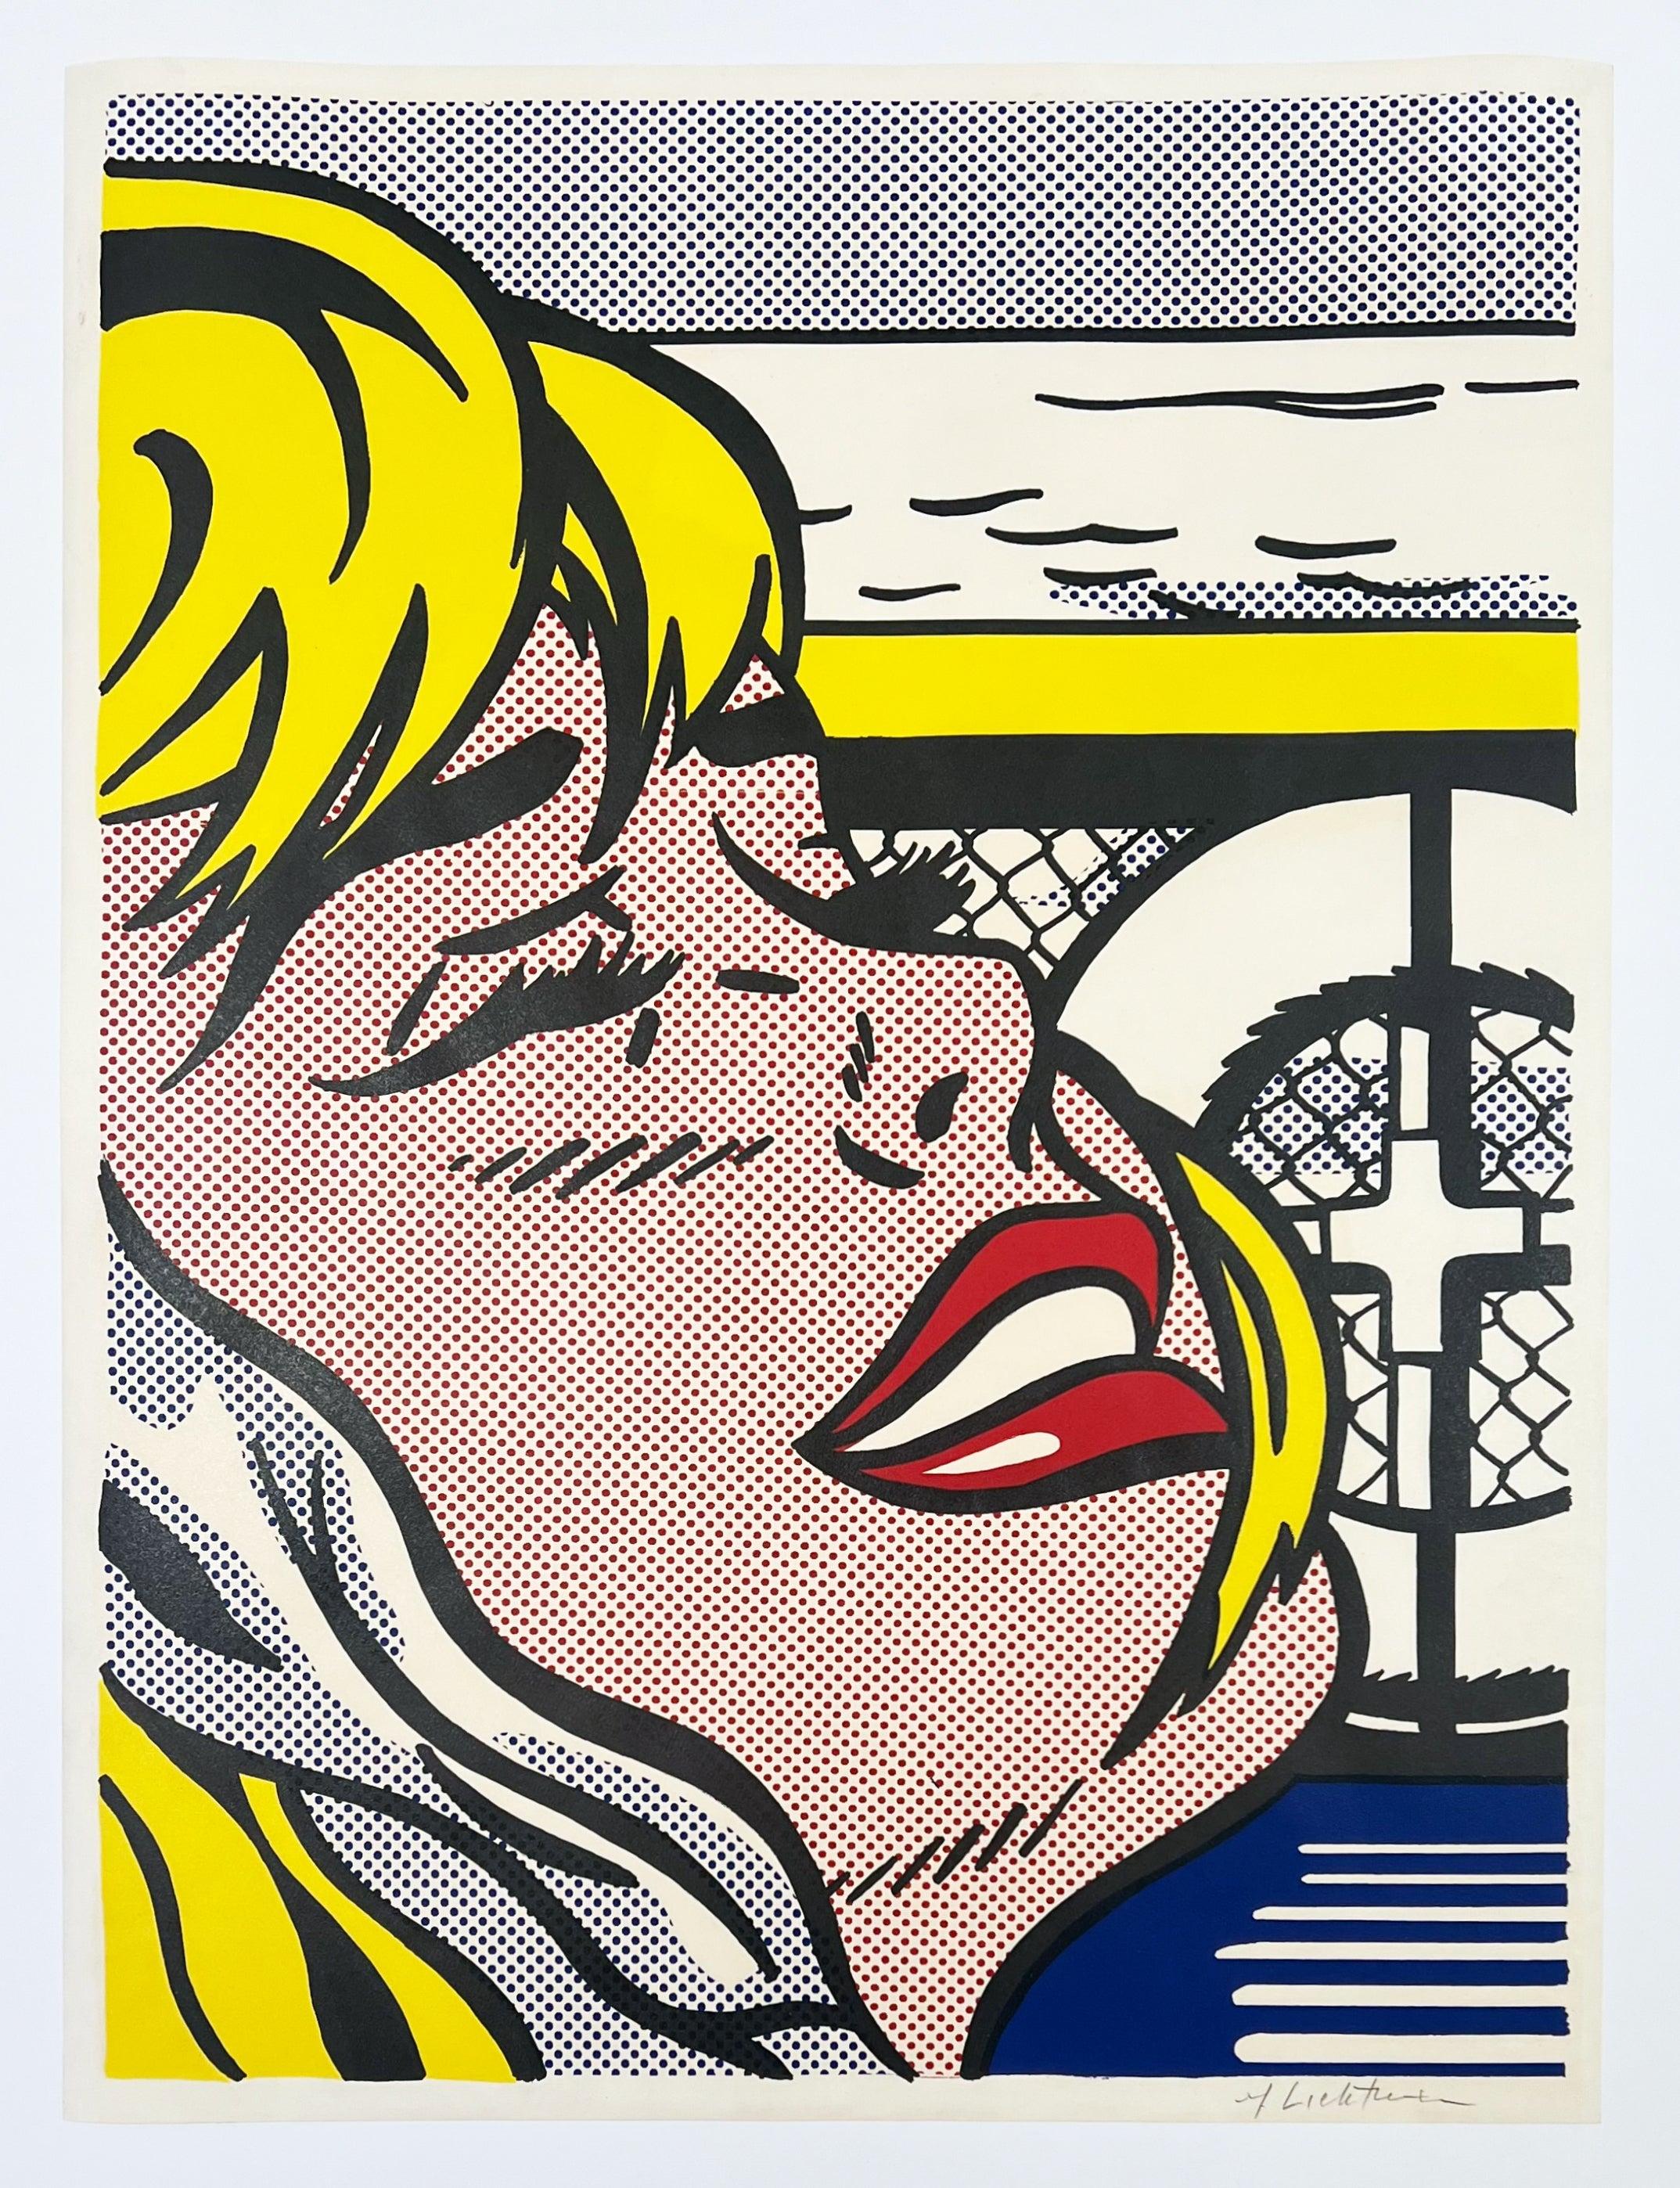 Artist: Roy Lichtenstein
Title: Shipboard Girl
Medium: Offset lithograph on white wove paper
Date: 1965
Edition: Unknown
Frame Size: 35 5/8